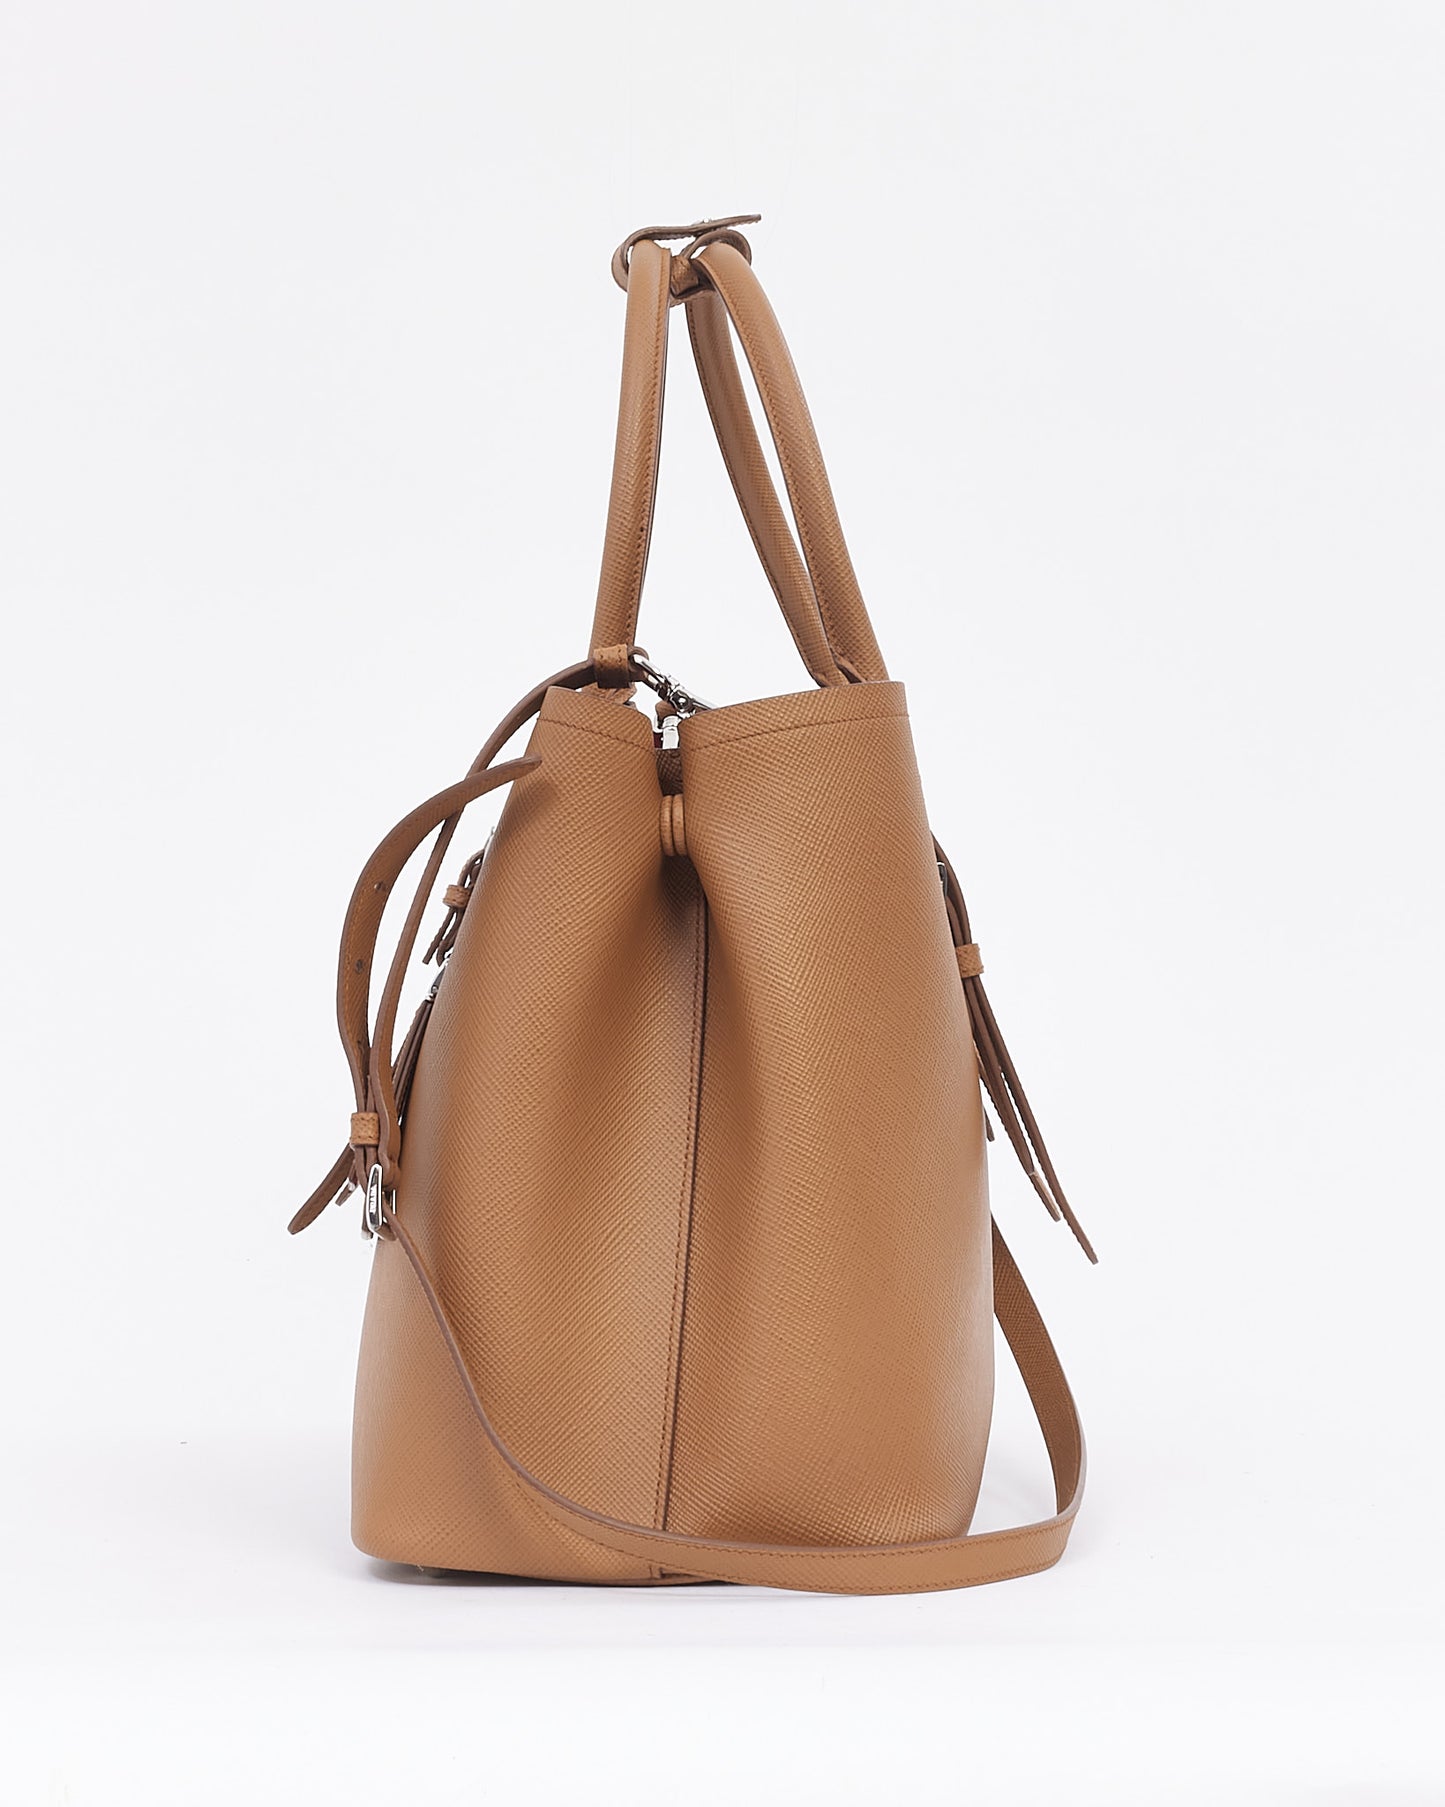 Prada Tan Saffiano Leather Medium Double Tote Bag